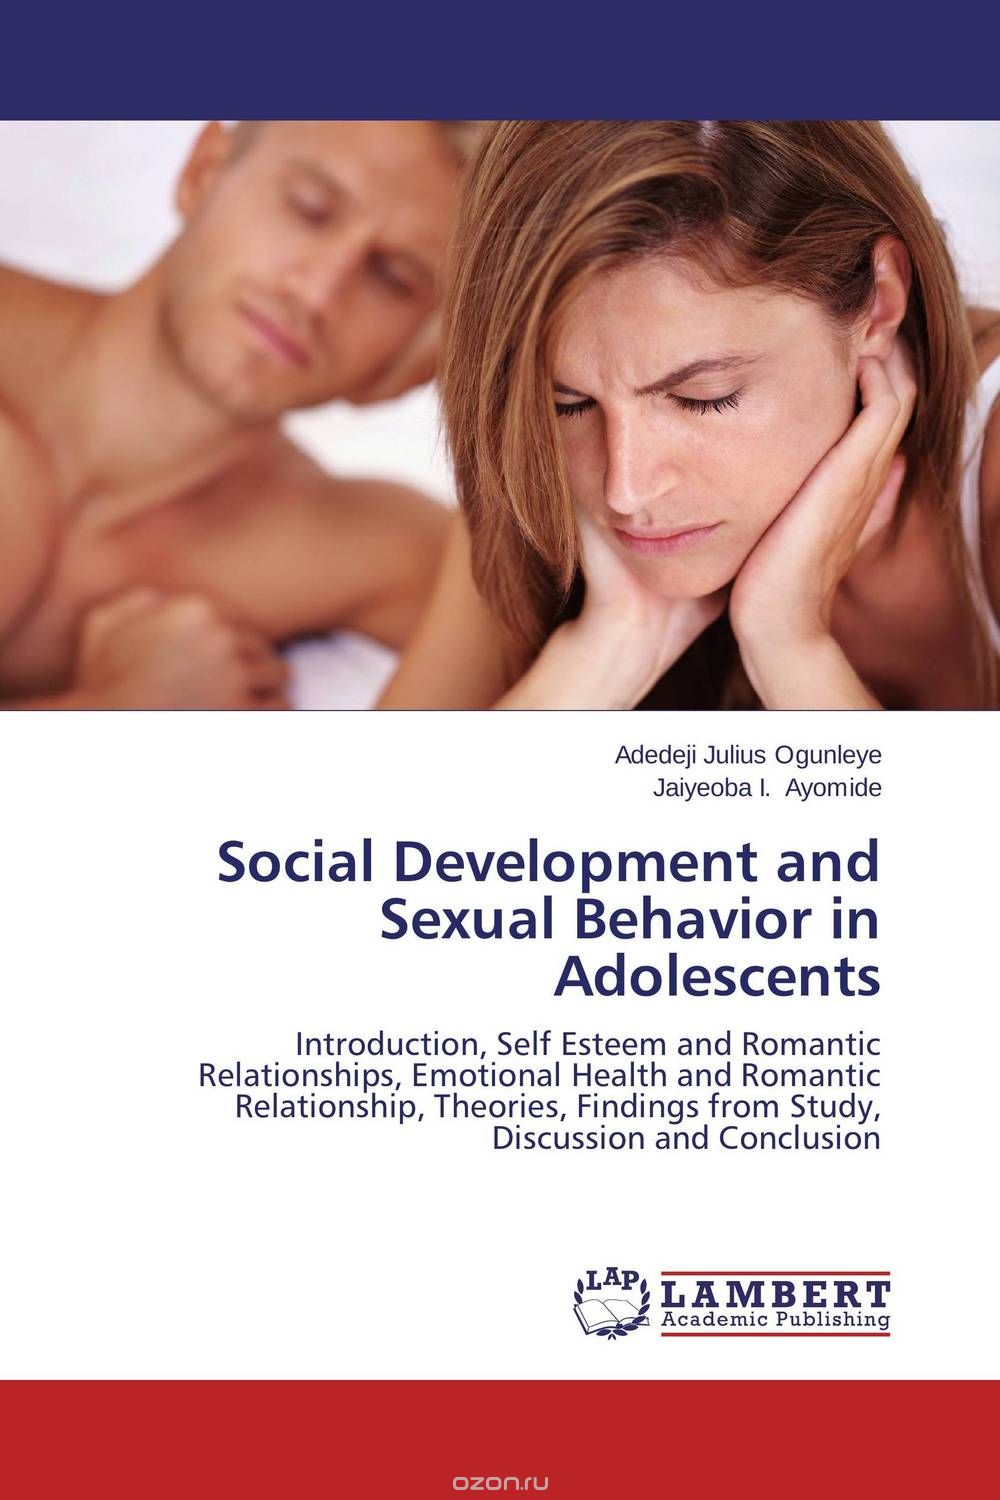 Скачать книгу "Social Development and Sexual Behavior in Adolescents"